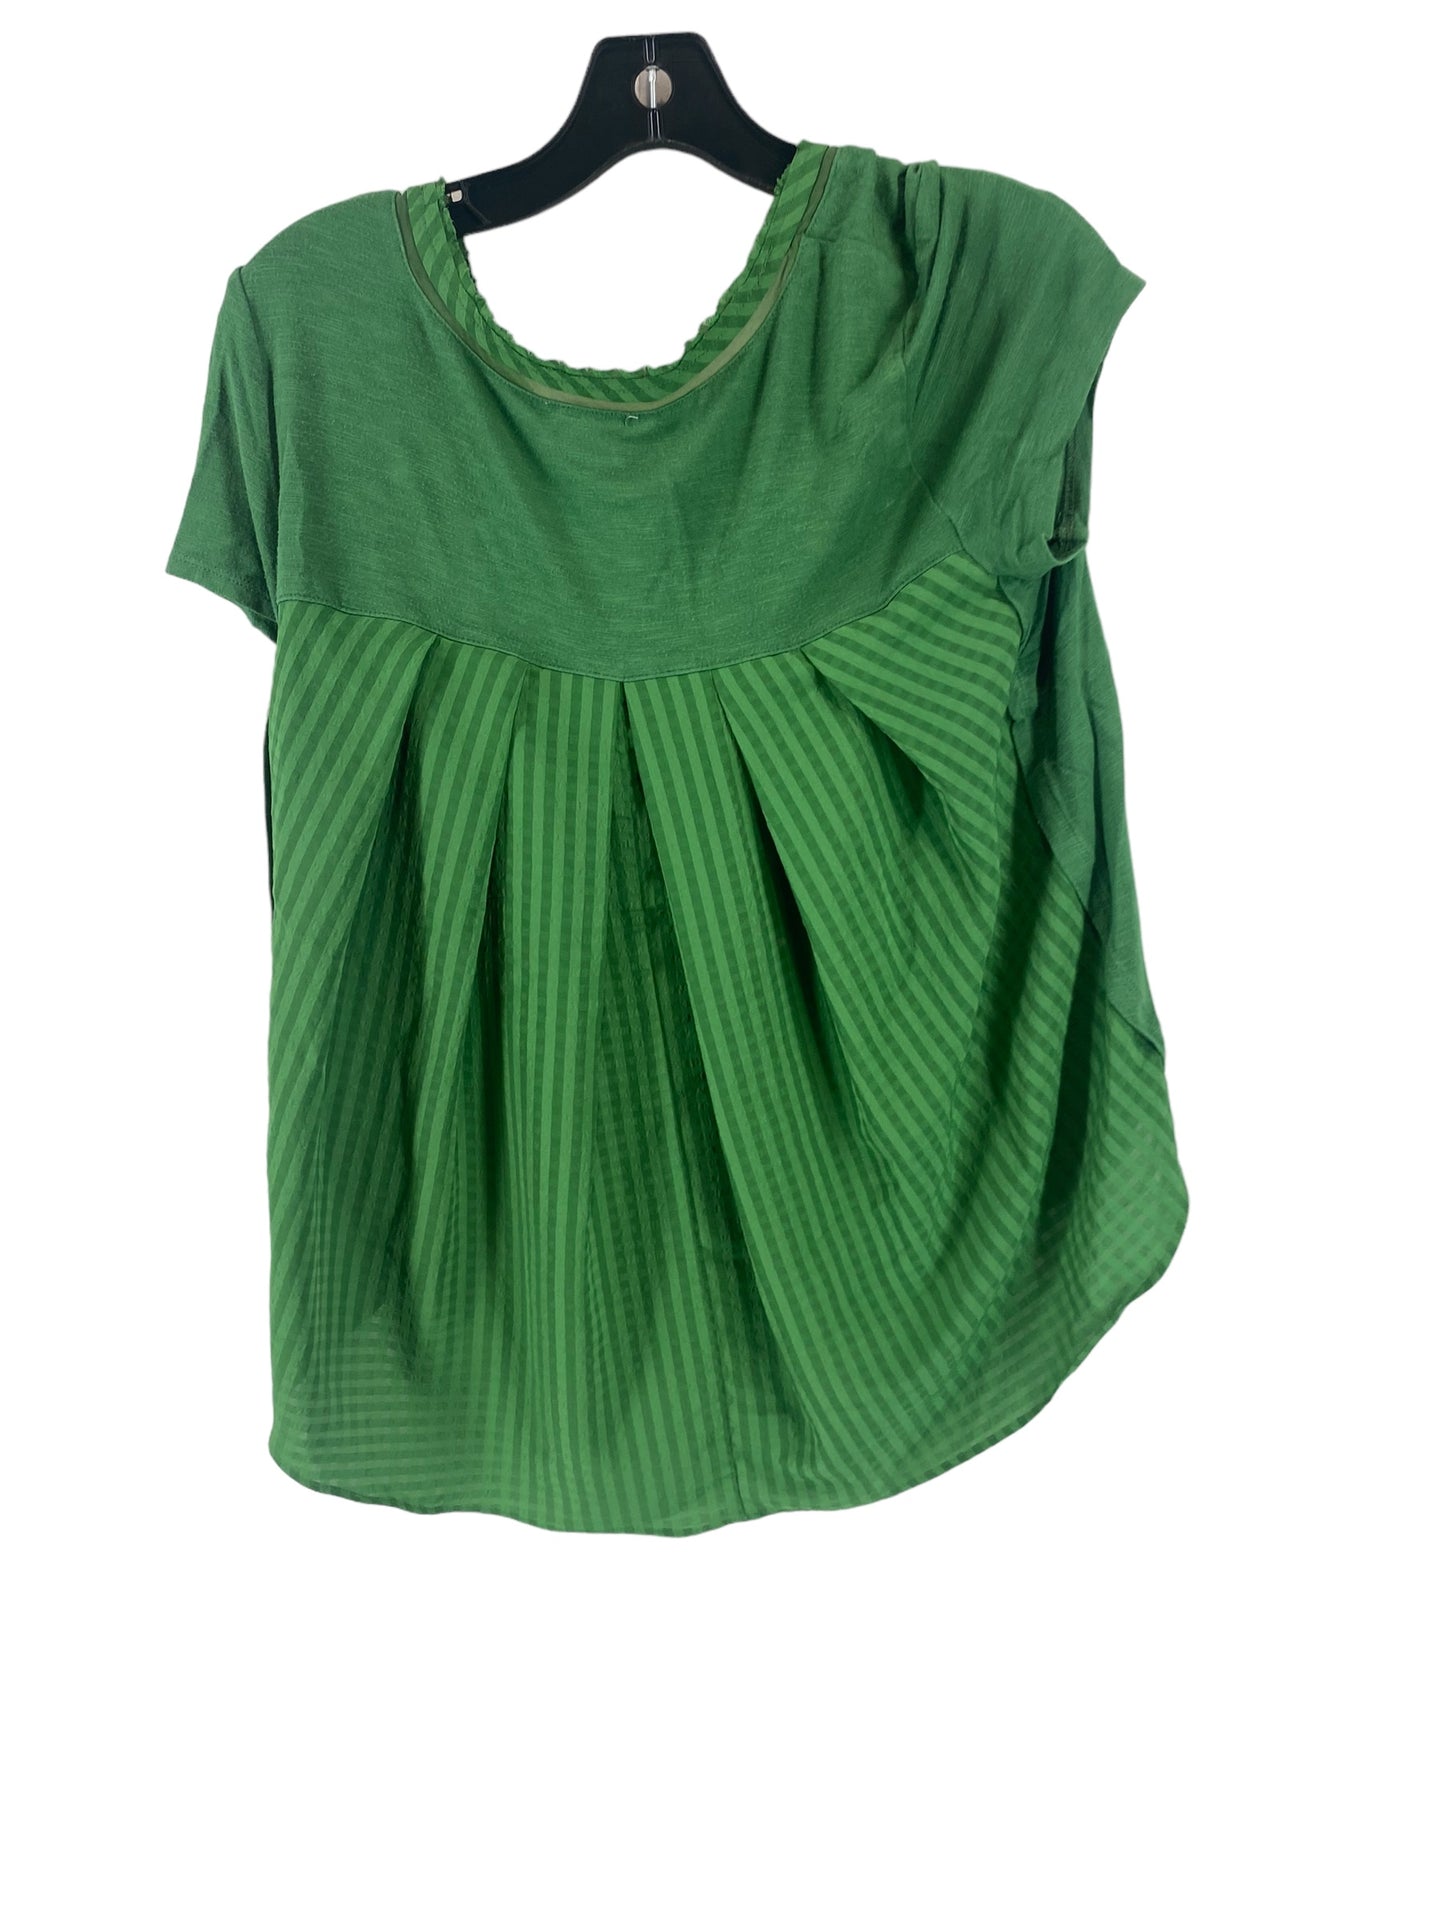 Green Top Short Sleeve Deletta, Size S